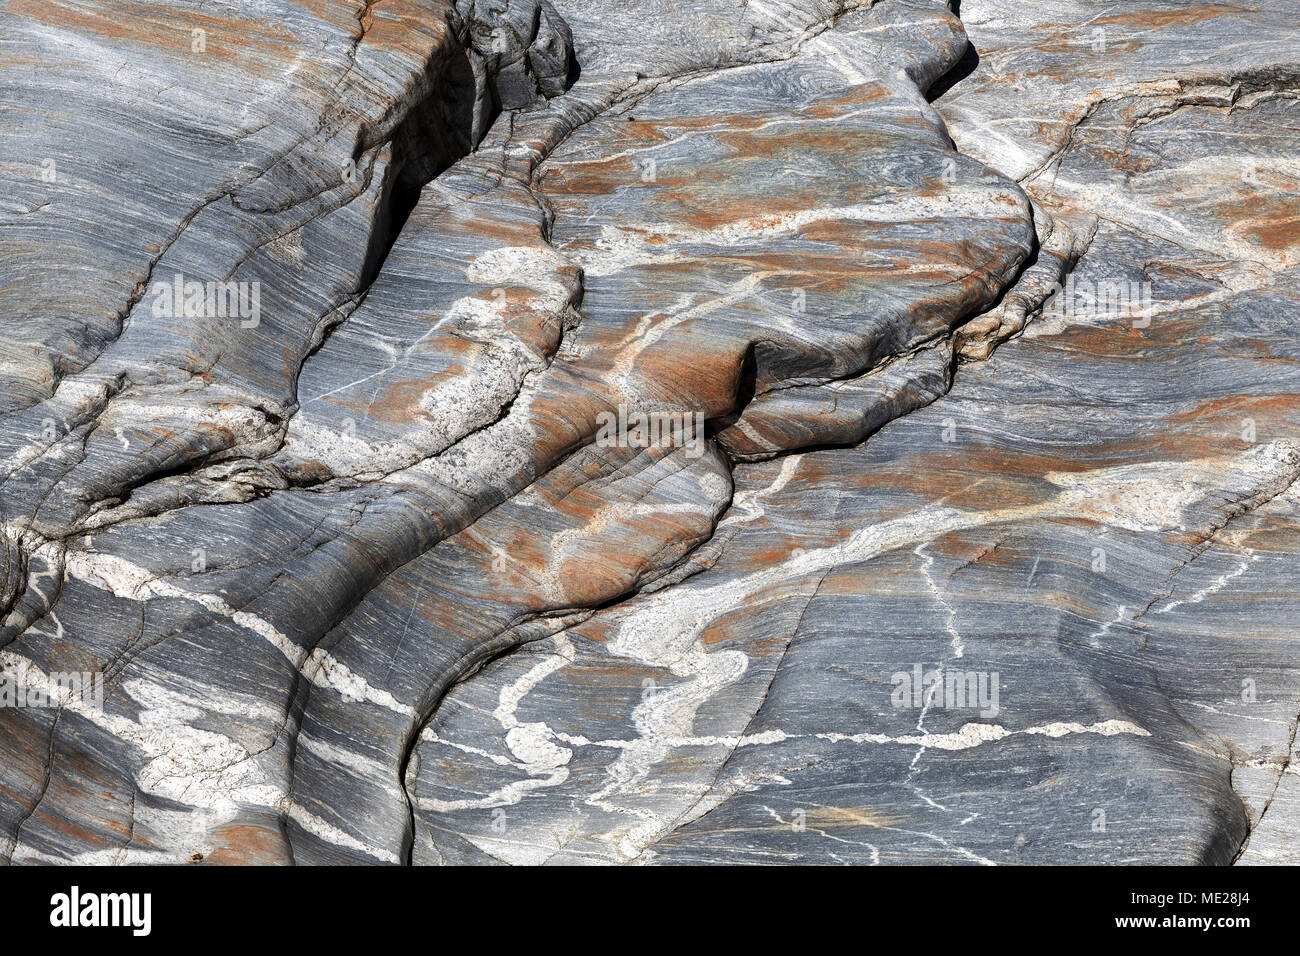 Granite rock formations in the Maggia river in the Maggia Valley, Valle Maggia, Ponte Brolla, Canton of Ticino, Switzerland Stock Photo